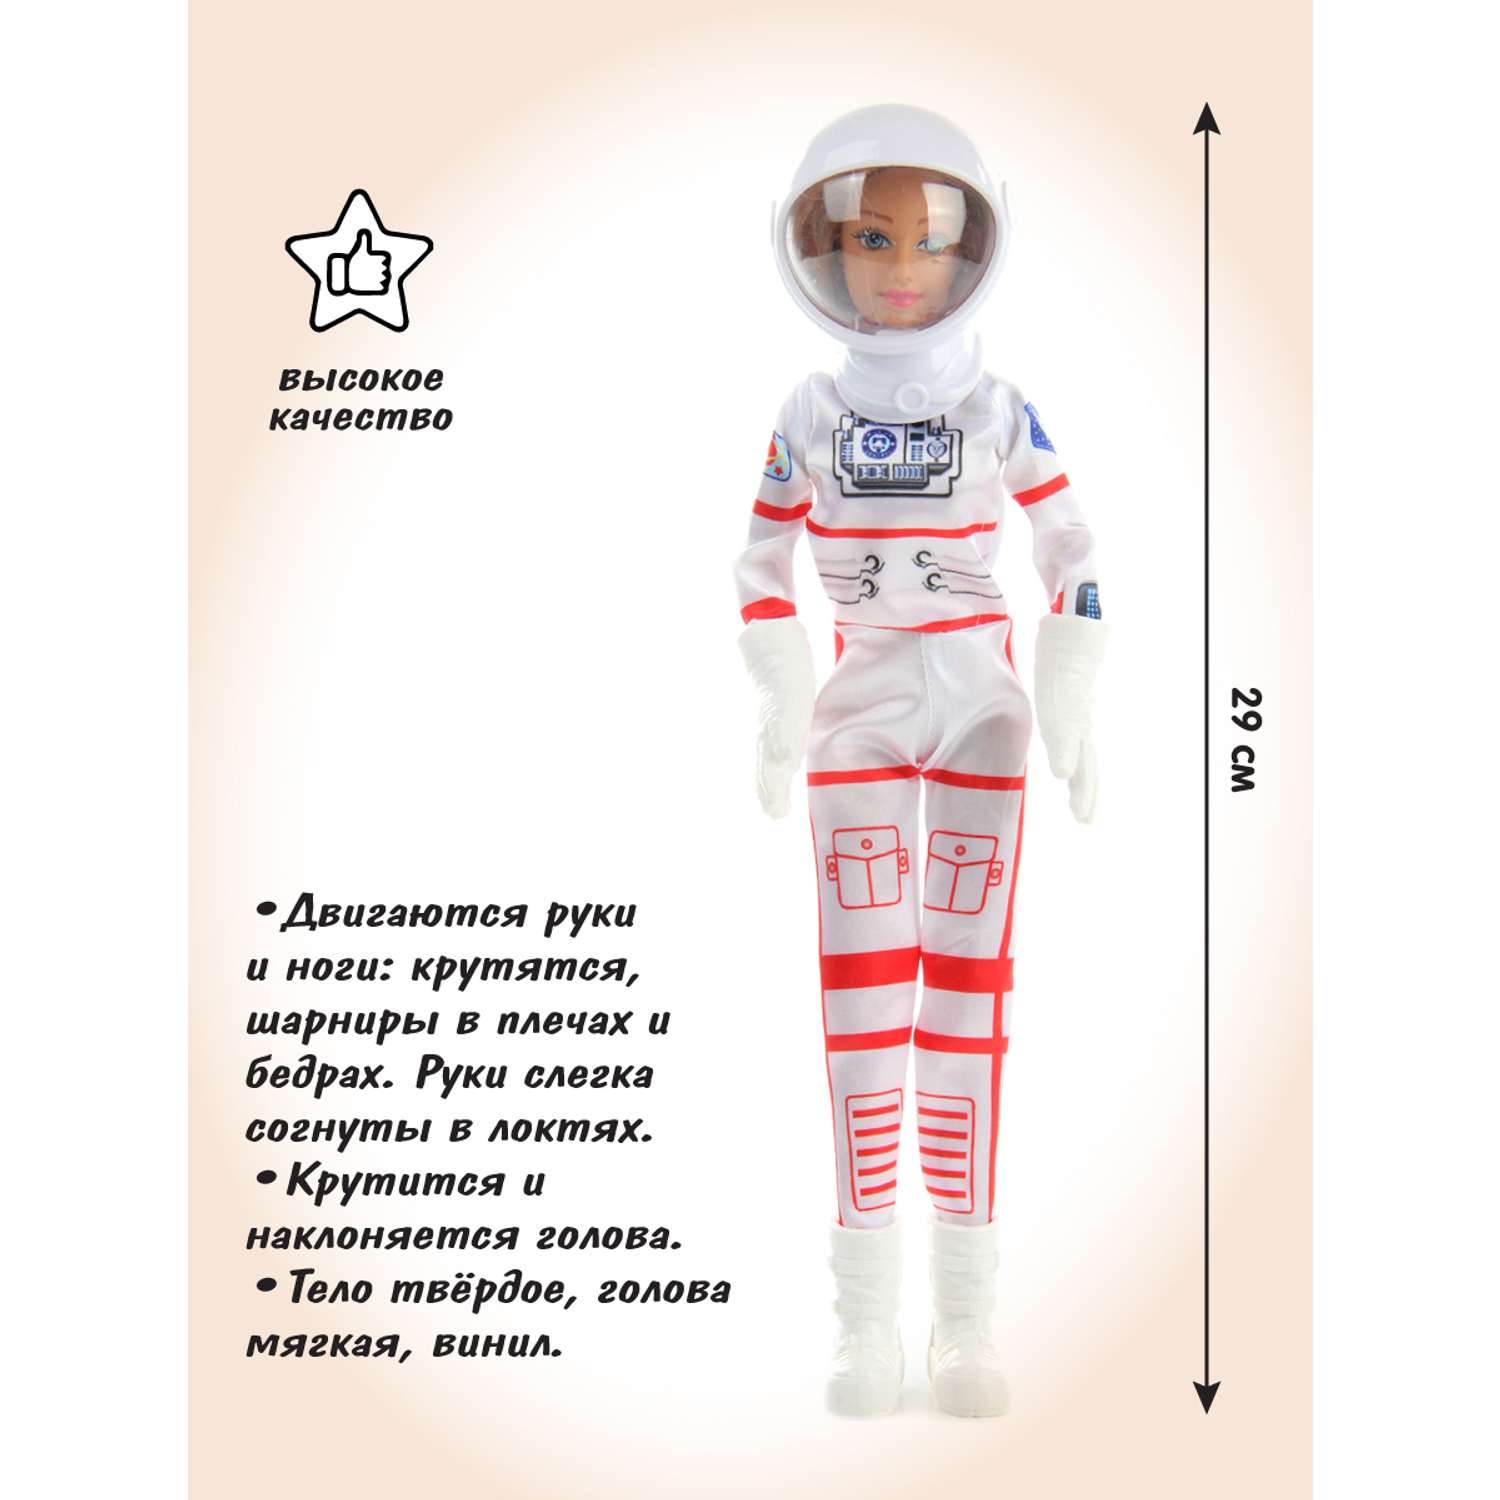 Кукла модель Барби Veld Co космонавт 116005 - фото 2